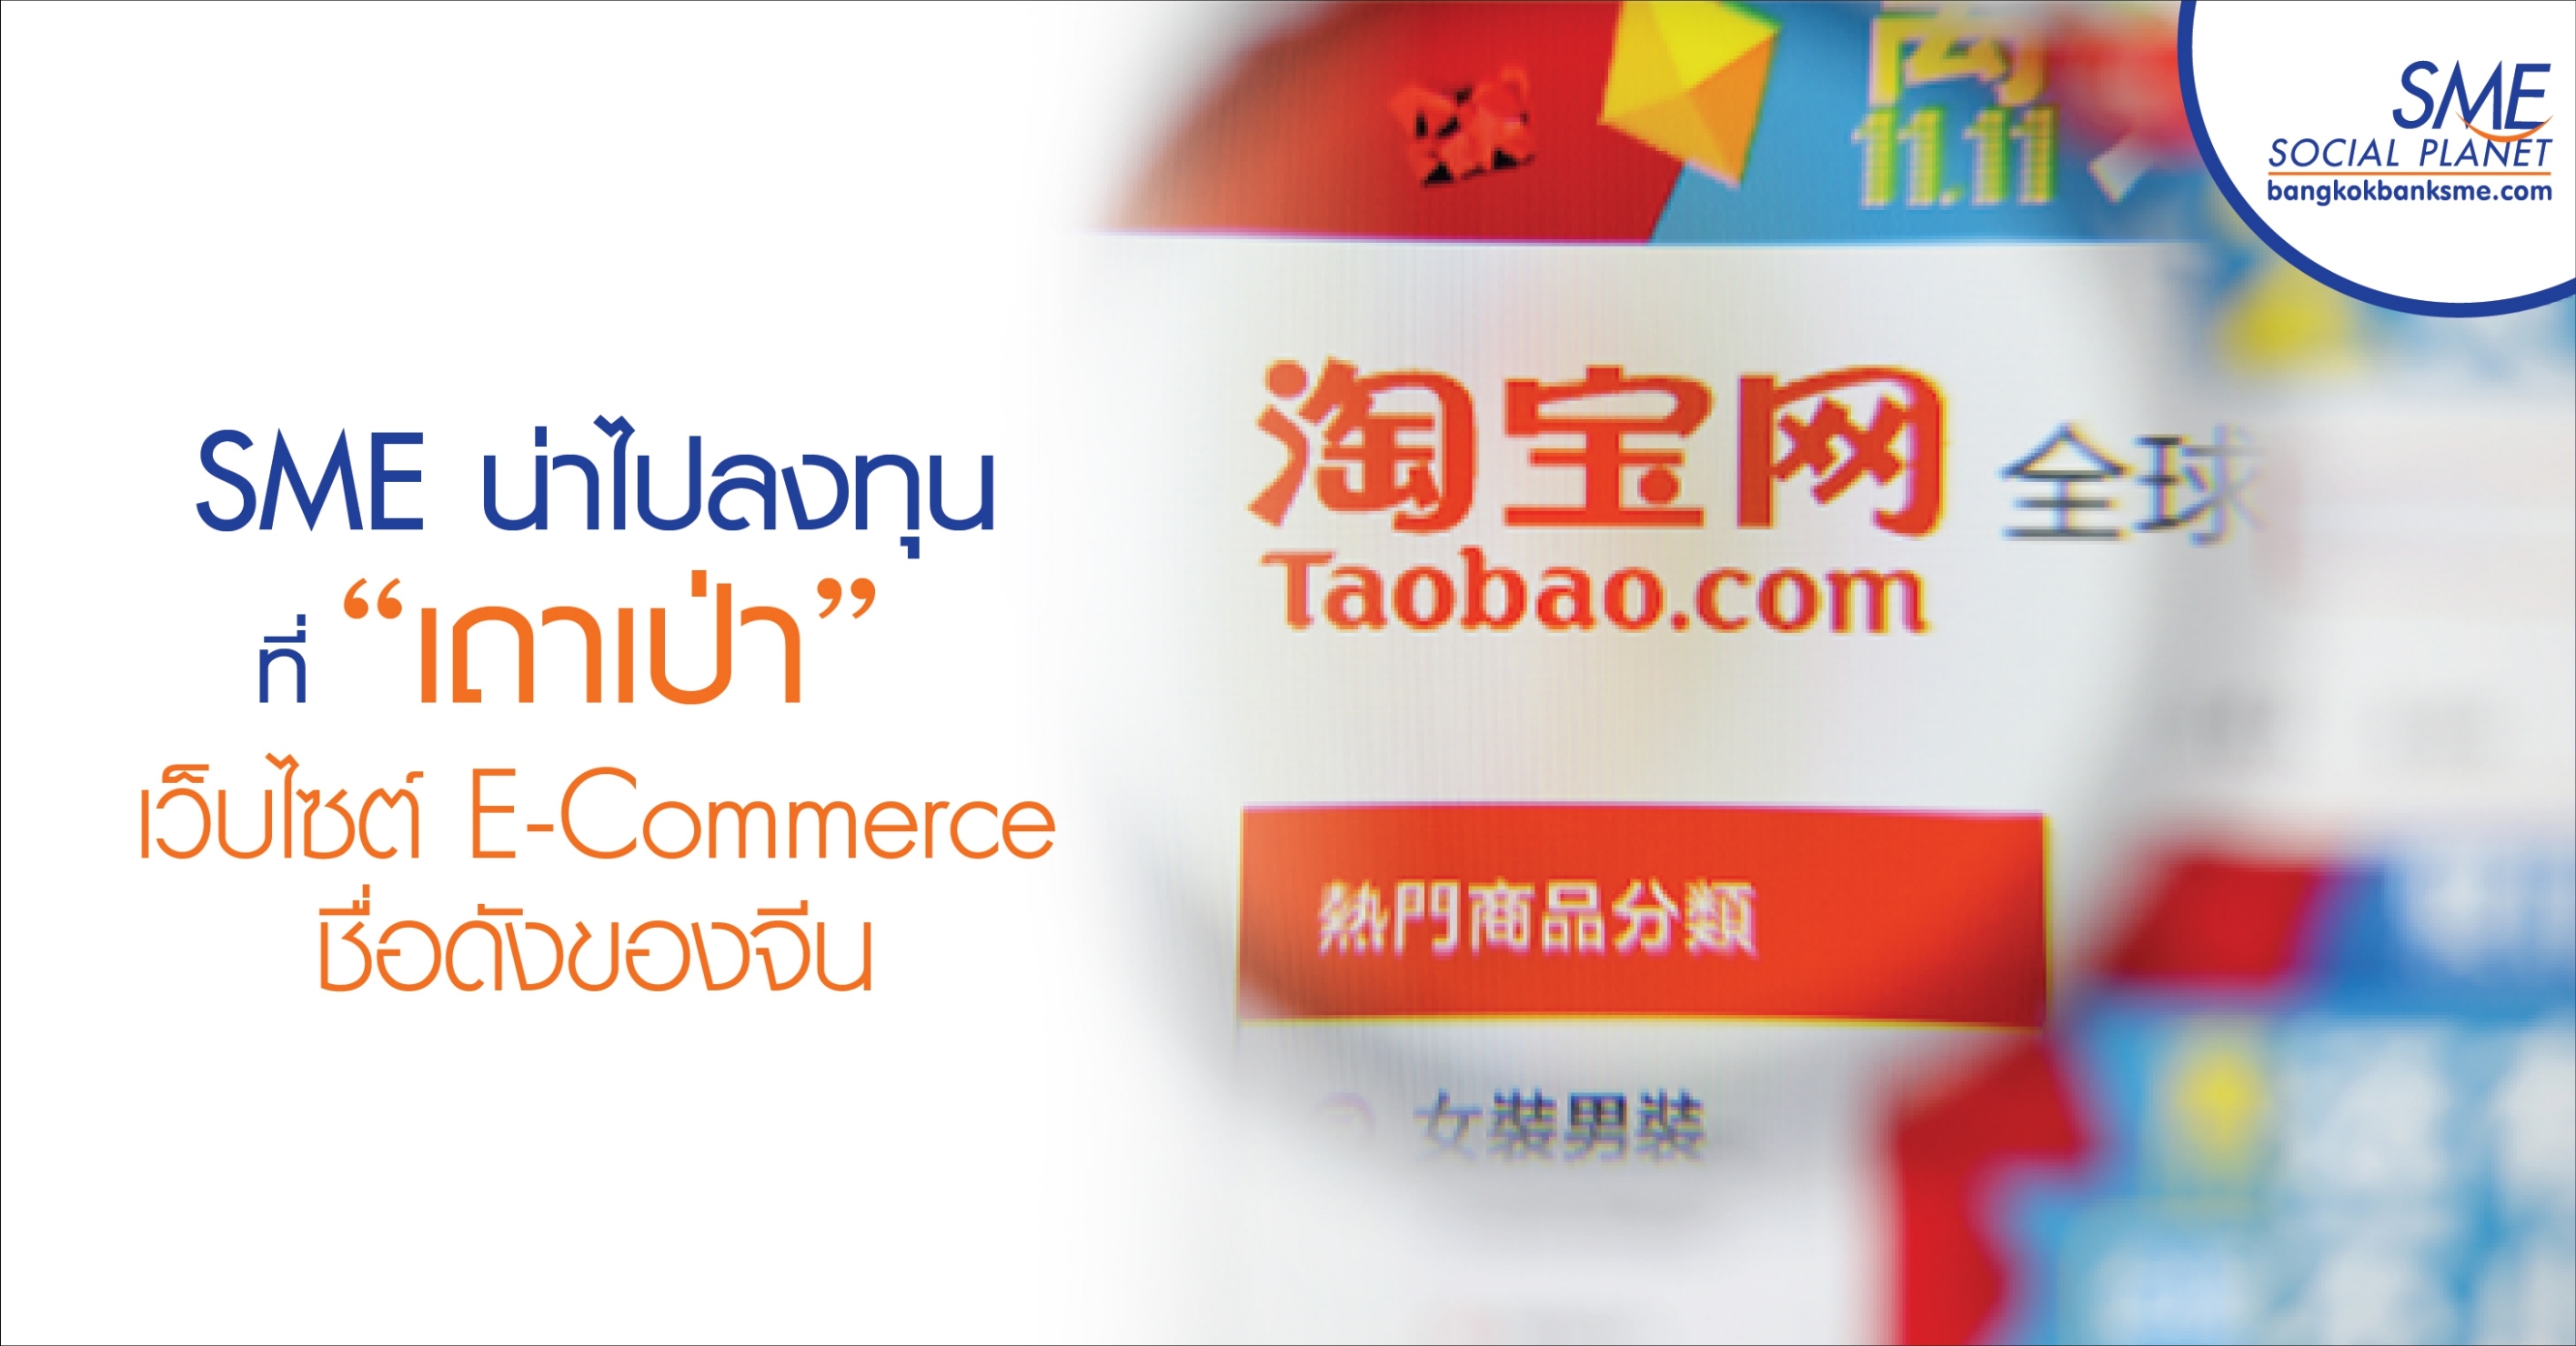 SME น่าไปลงทุนที่ “เถาเป่า” เว็บไซต์ E-Commerce ชื่อดังของจีน